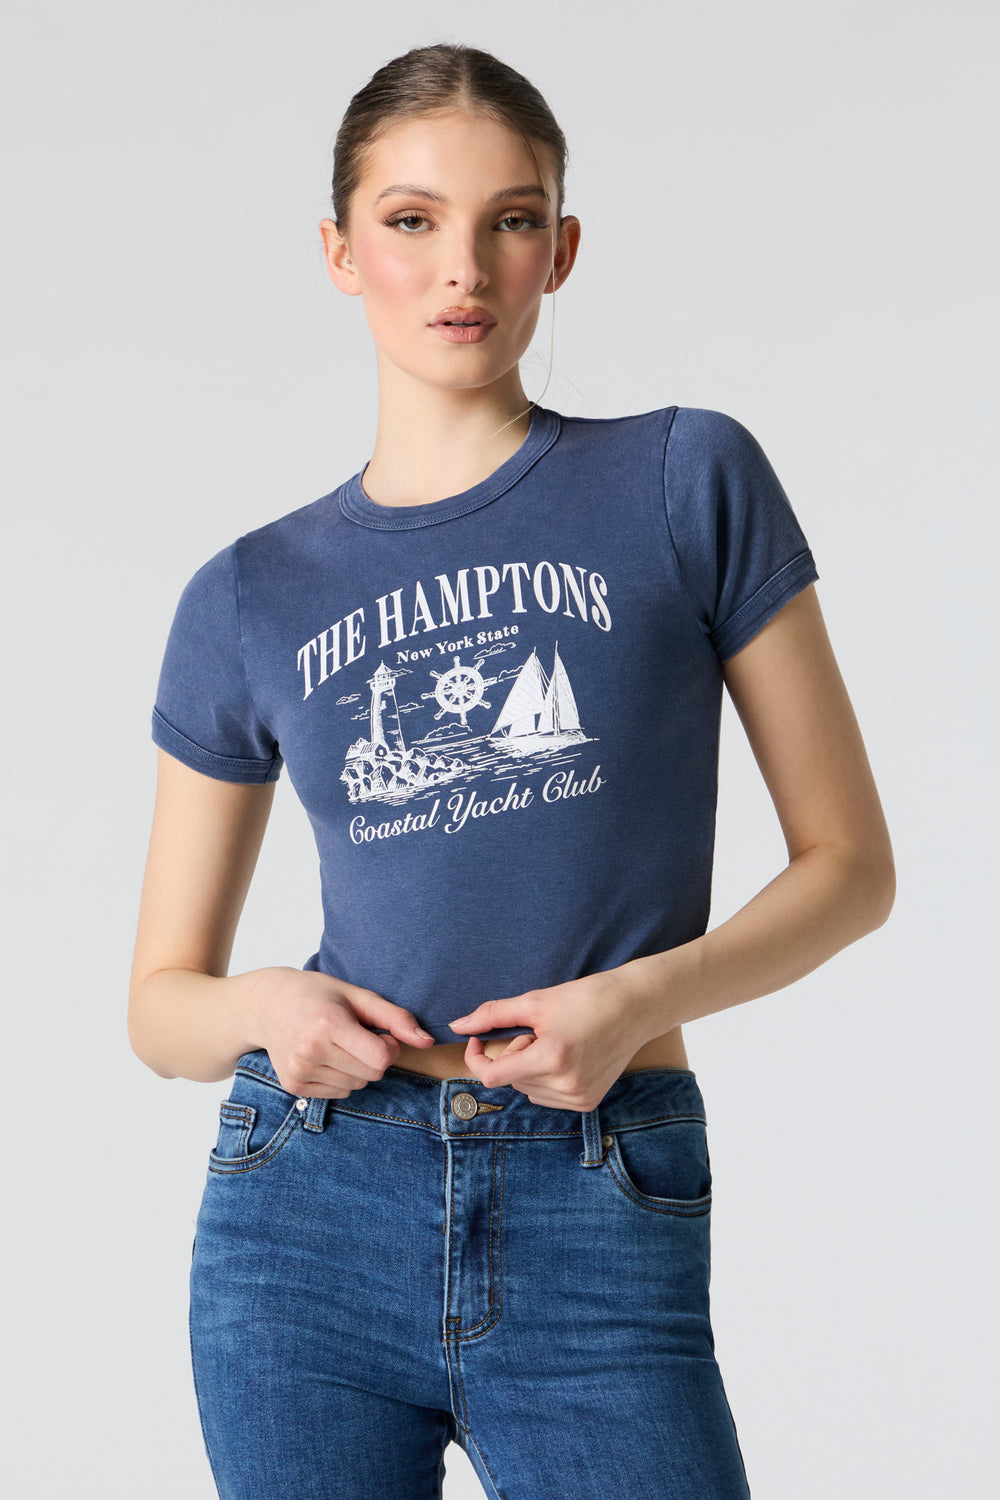 The Hamptons Graphic Baby T-Shirt The Hamptons Graphic Baby T-Shirt 2